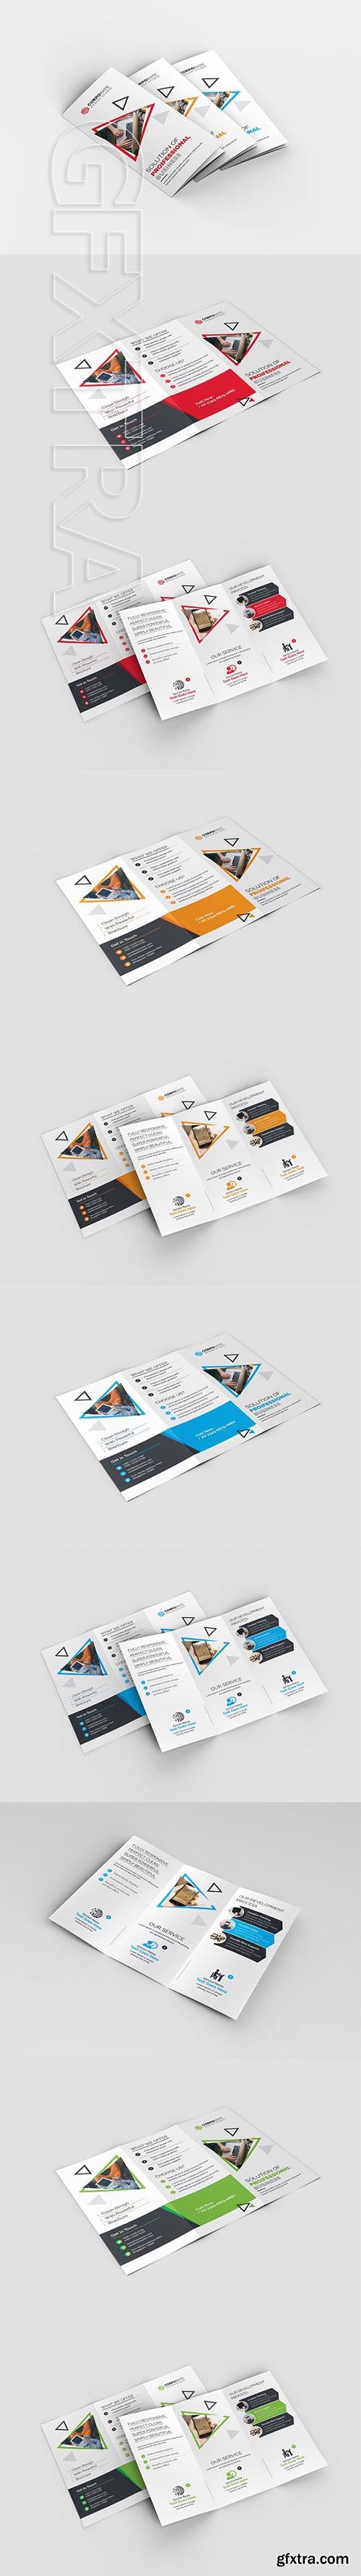 CreativeMarket - Business Tri-Fold Brochure 2080789